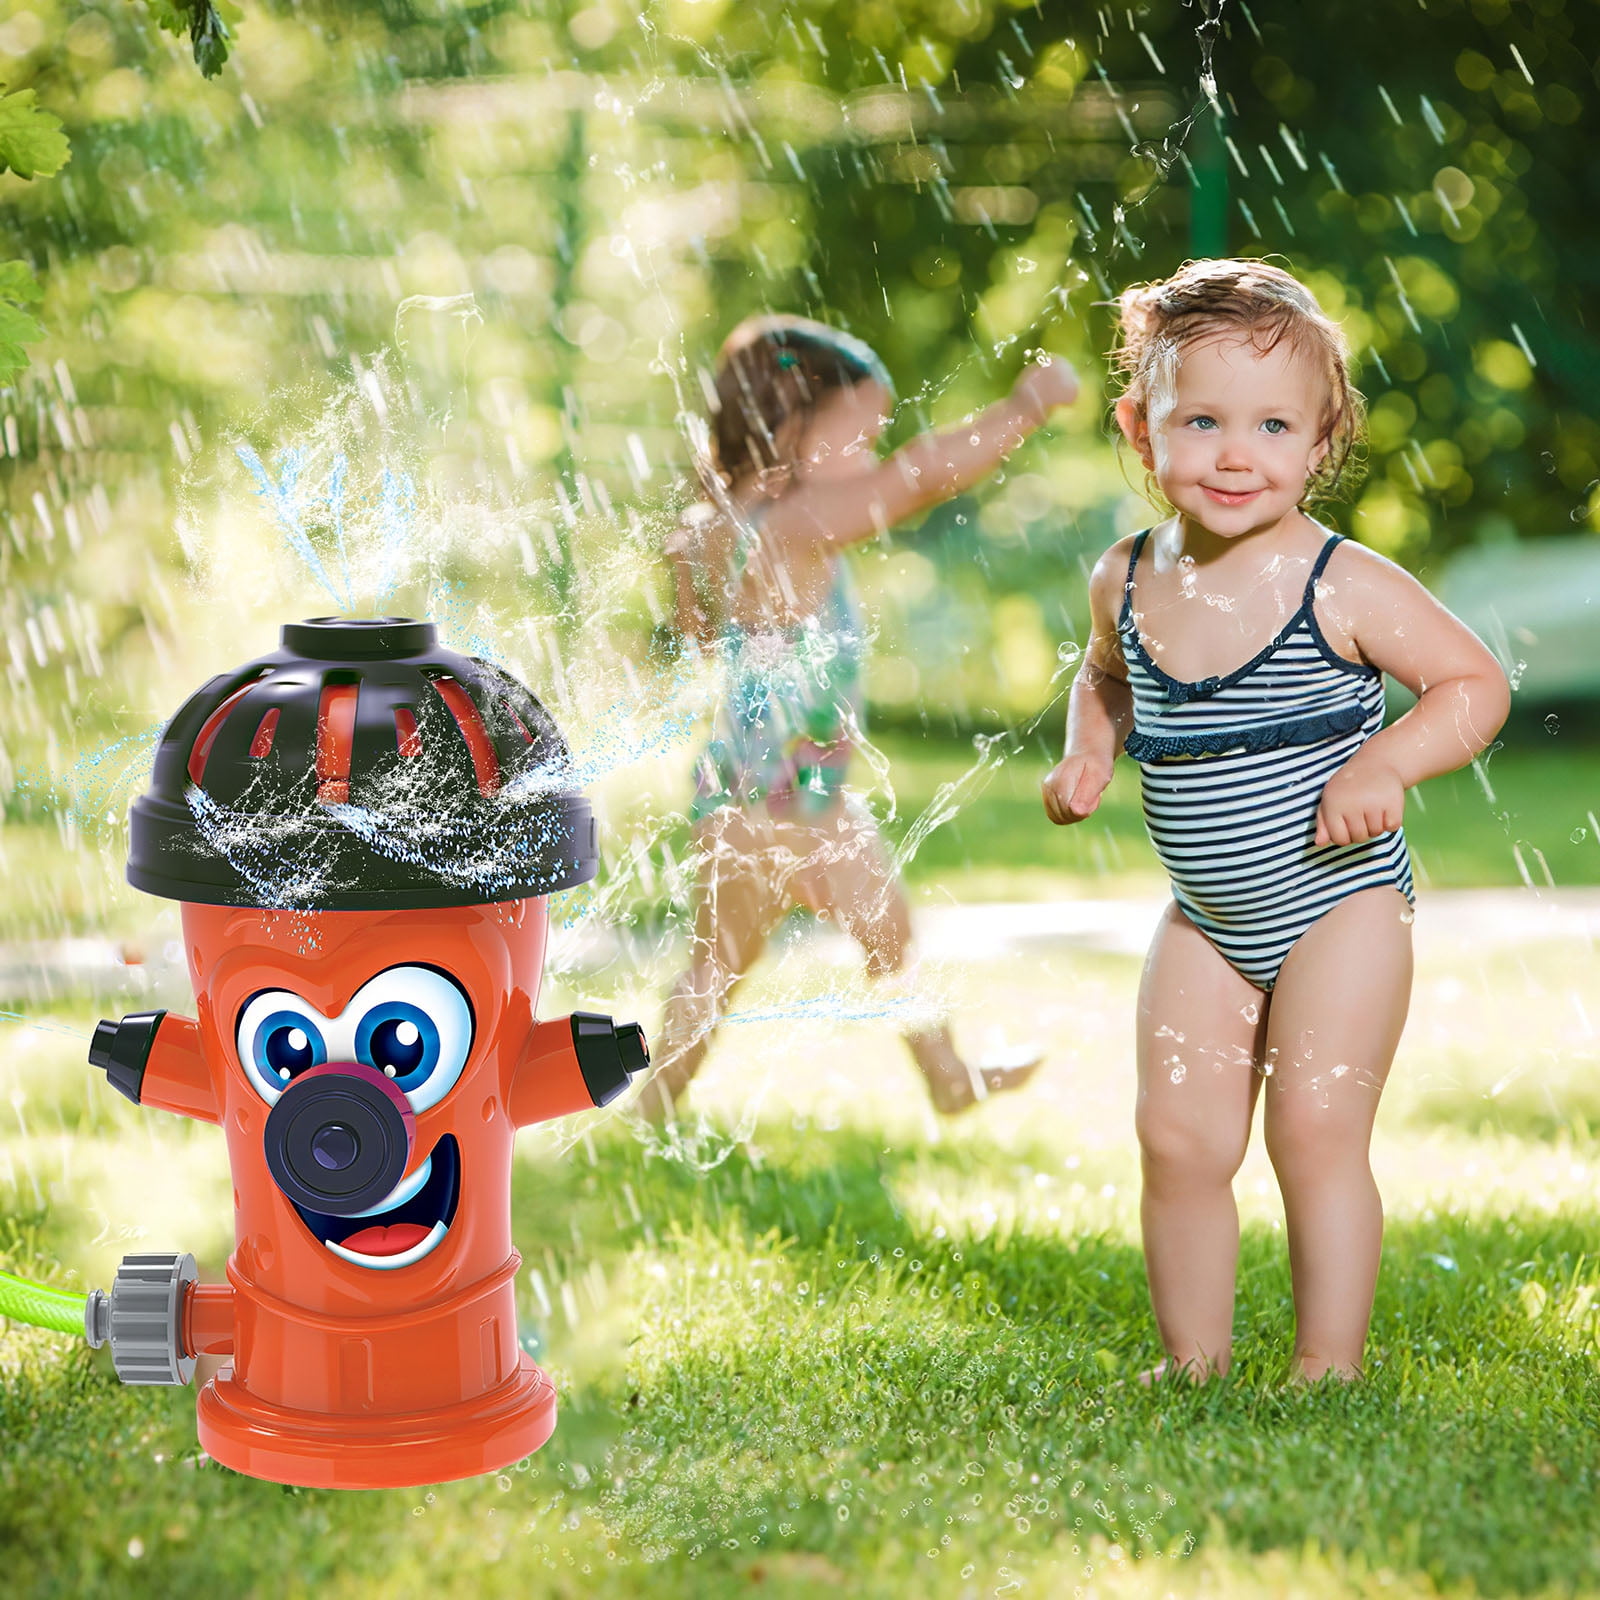 Cute Hydrant Water Spray Splash Sprinkler Toy for Kids Toddlers Summer Outdoor Lawn Backyard Water Fun